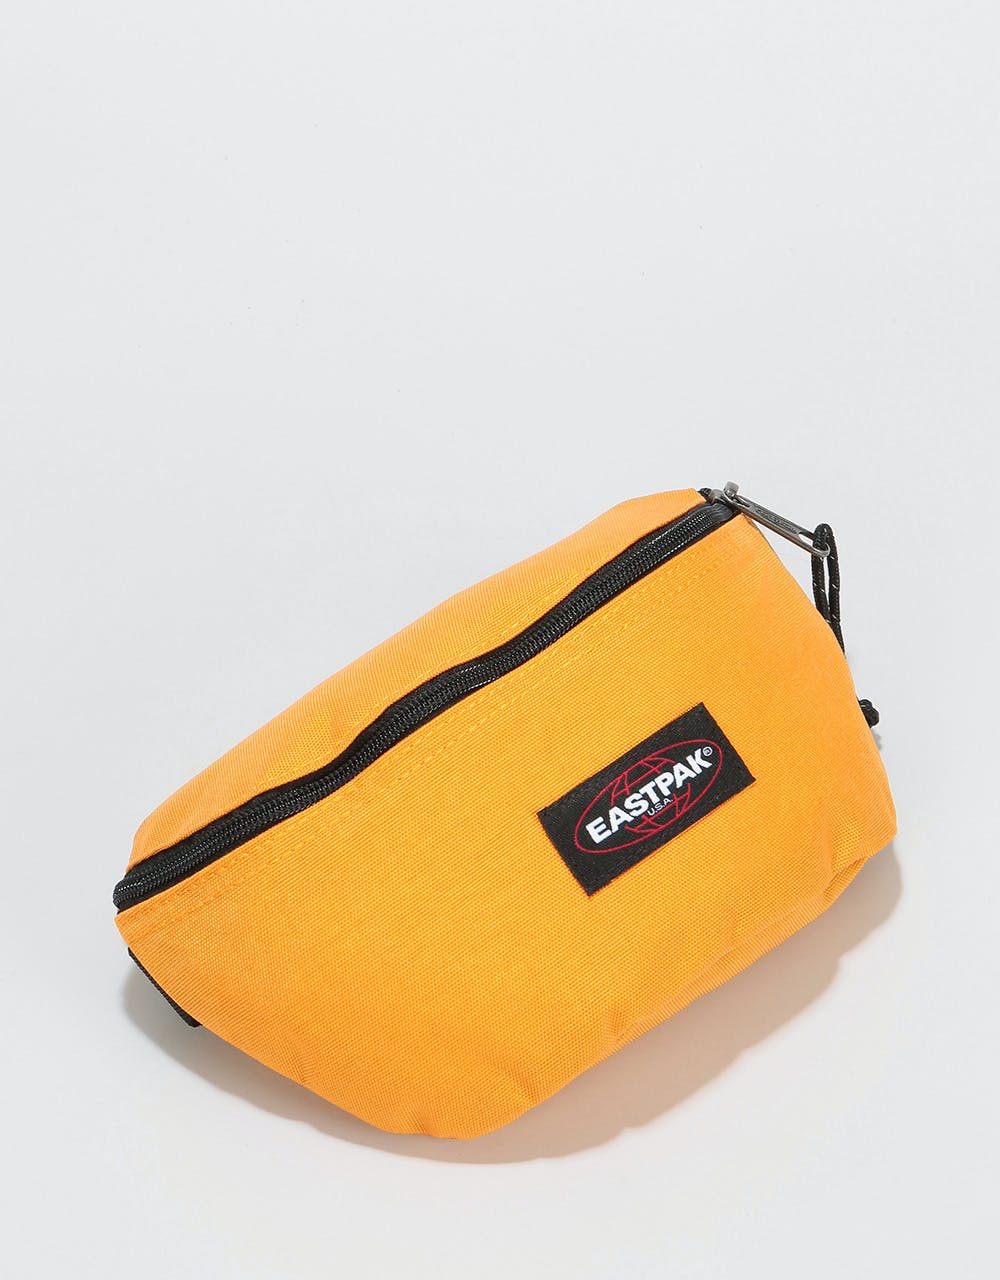 Eastpak Springer Cross Body Bag - Cab Yellow